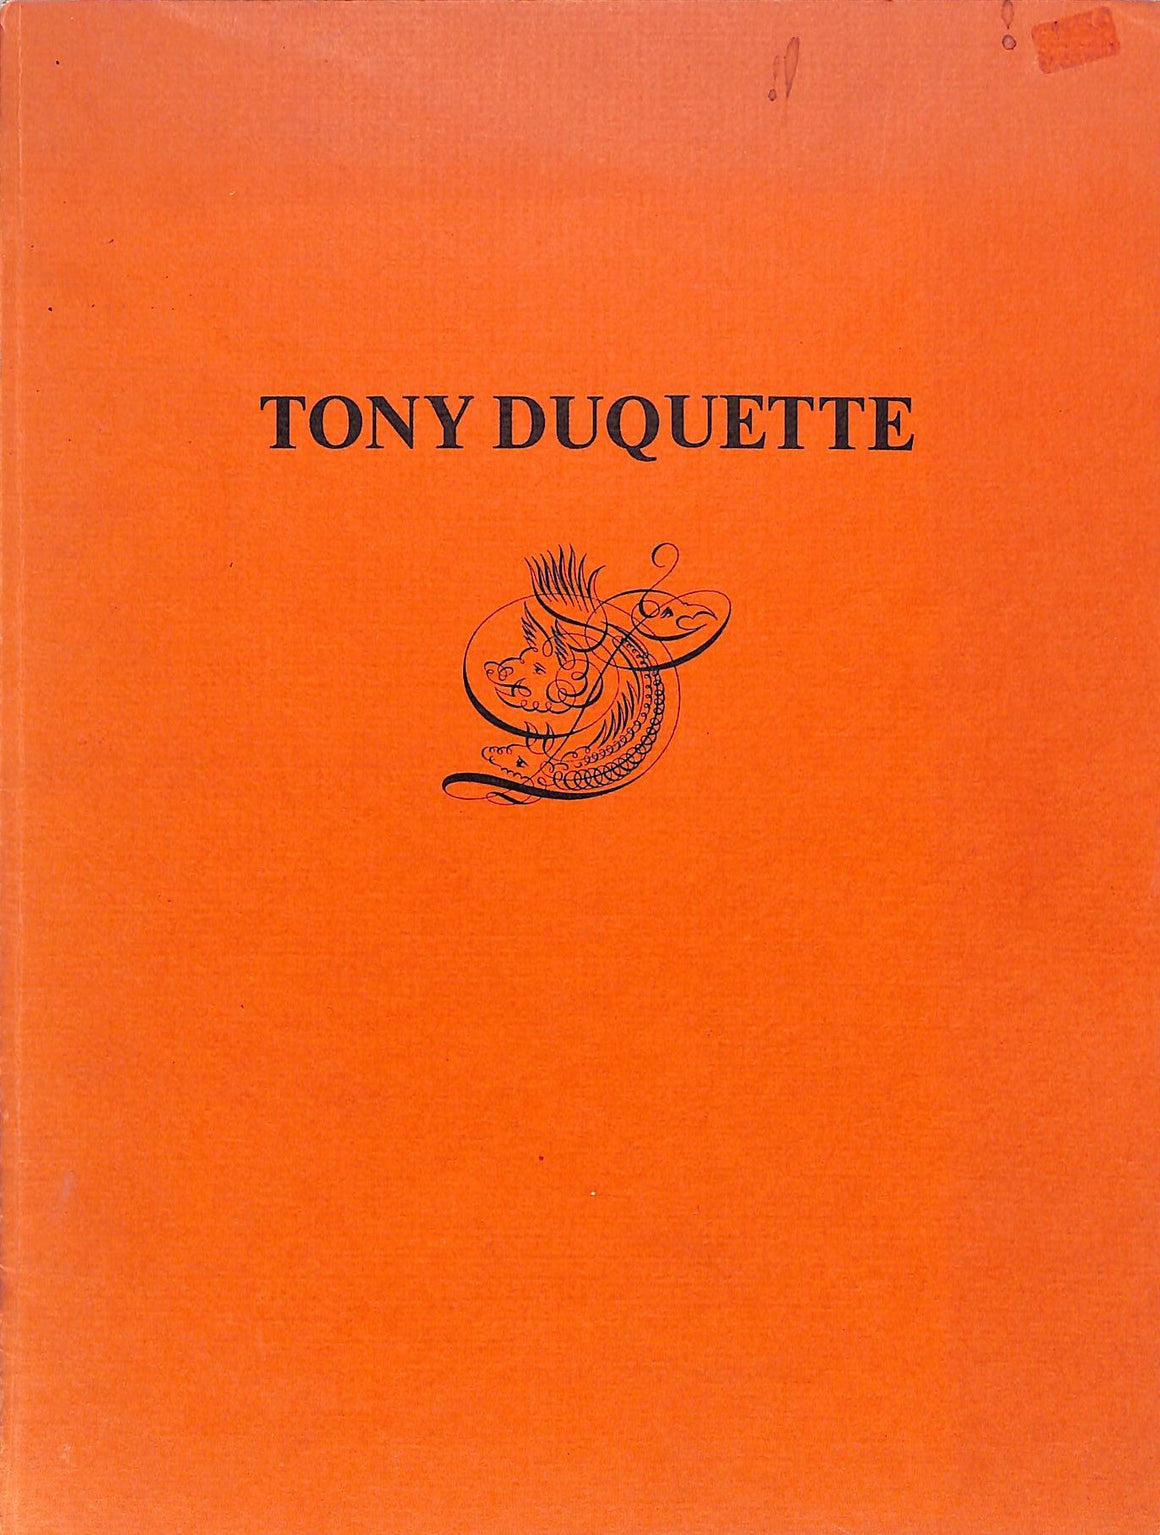 "Tony Duquette: A Personal Culture" 1971 (SOLD)